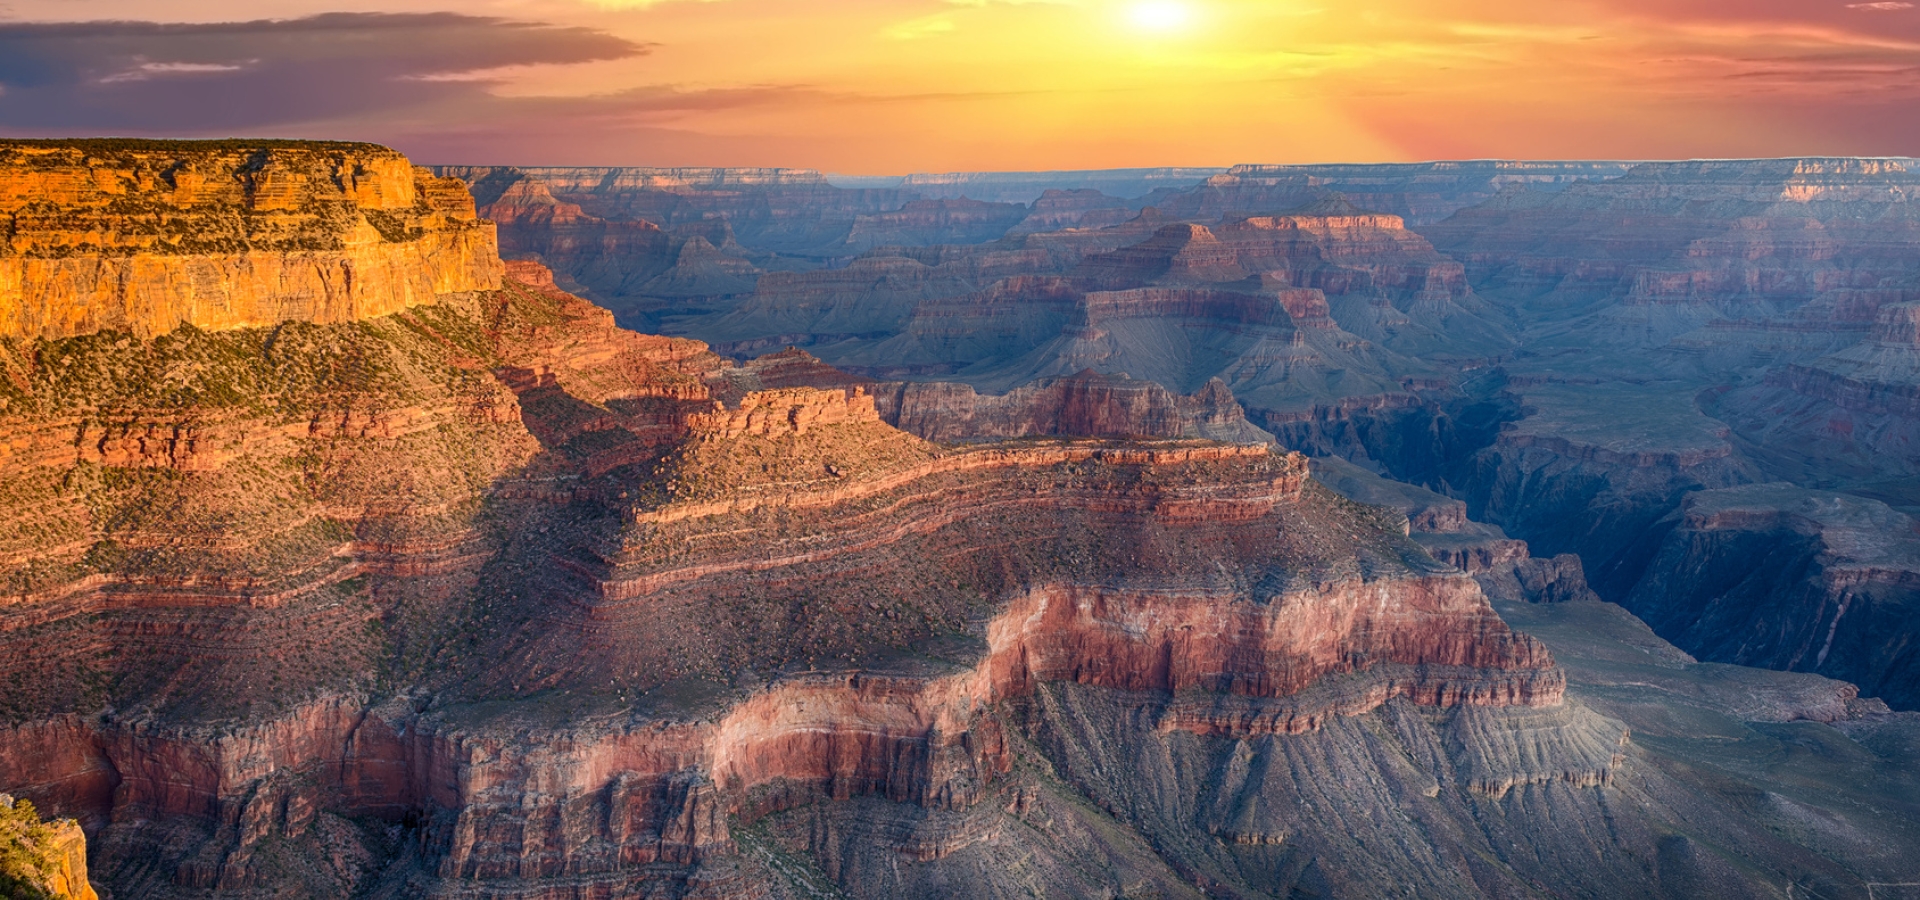 Grand Canyon National Park, AZ by Rail - Grand Canyon National